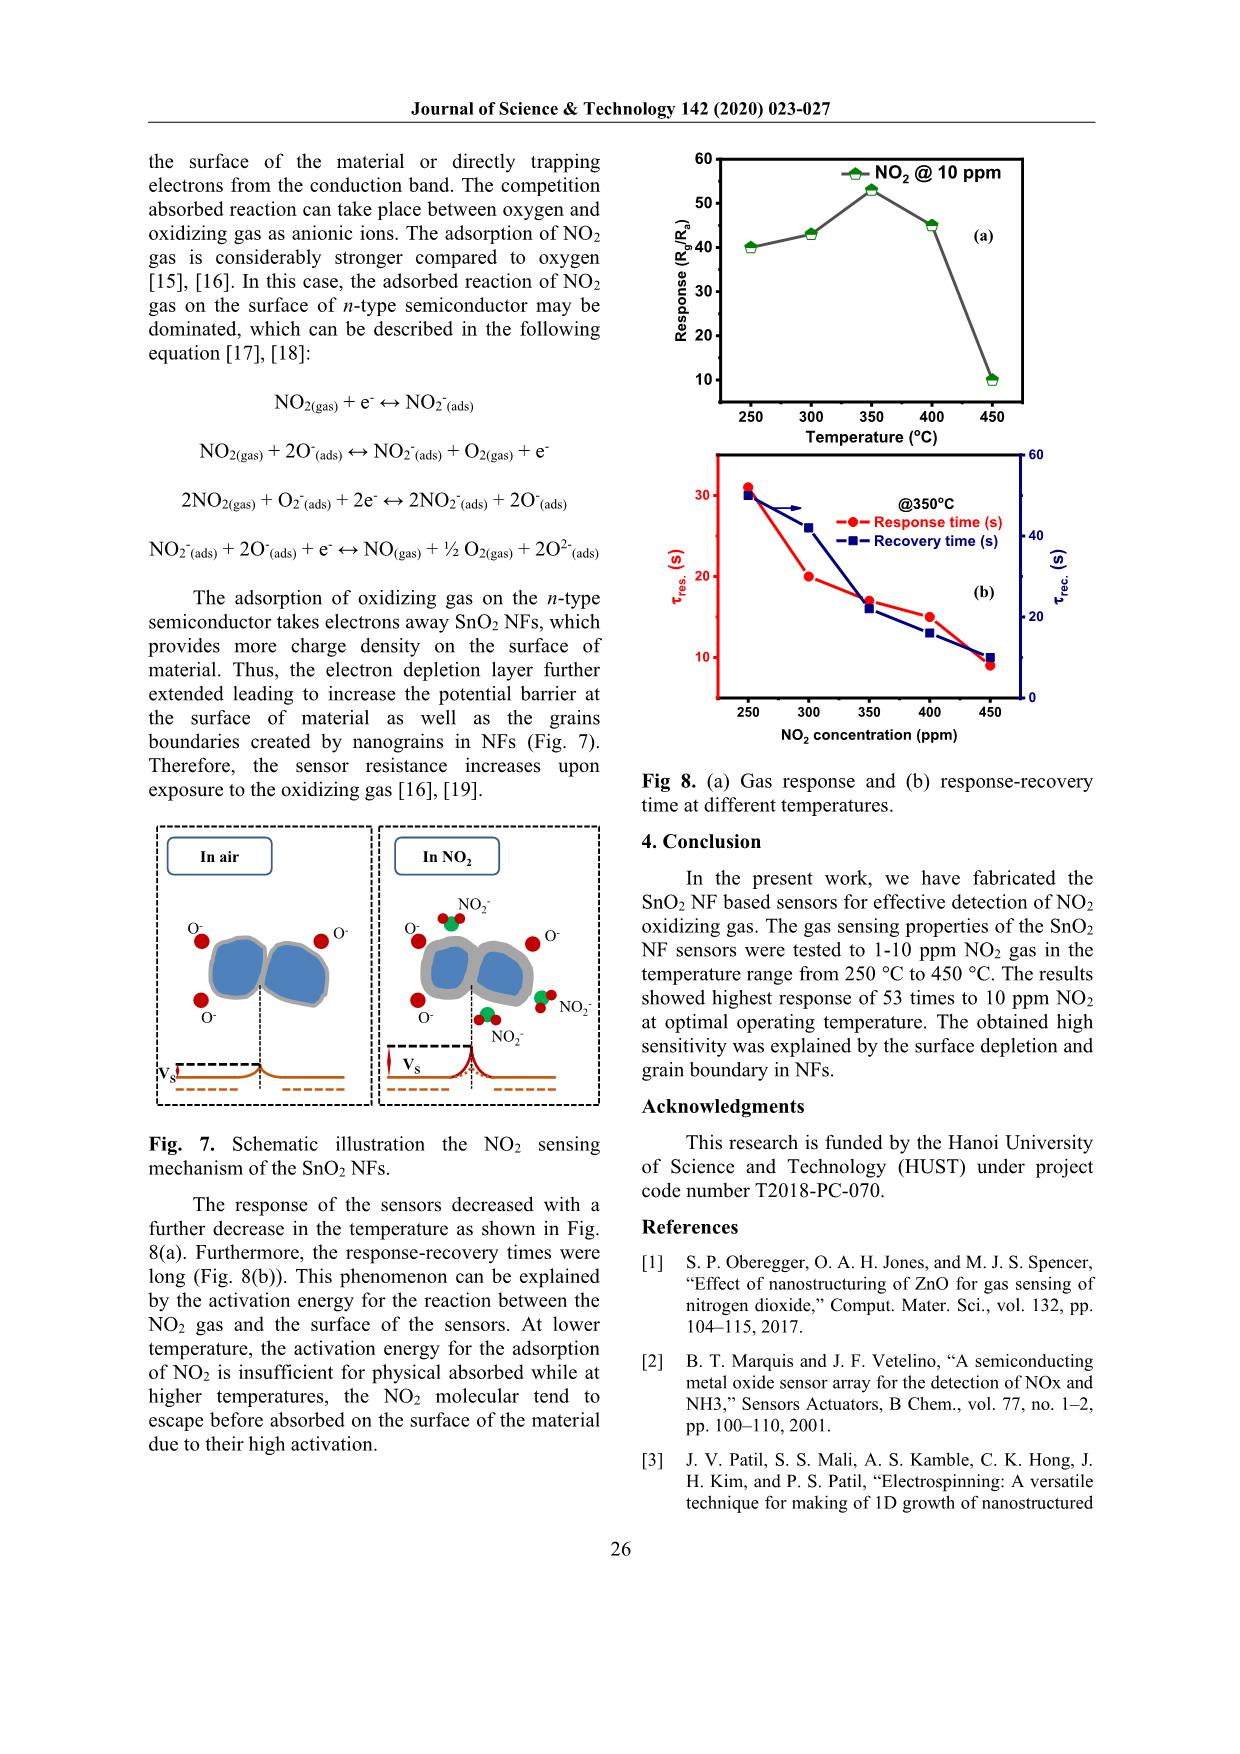 NO2 gas sensing characteristics of SNO2 nanofiber - based sensors trang 4